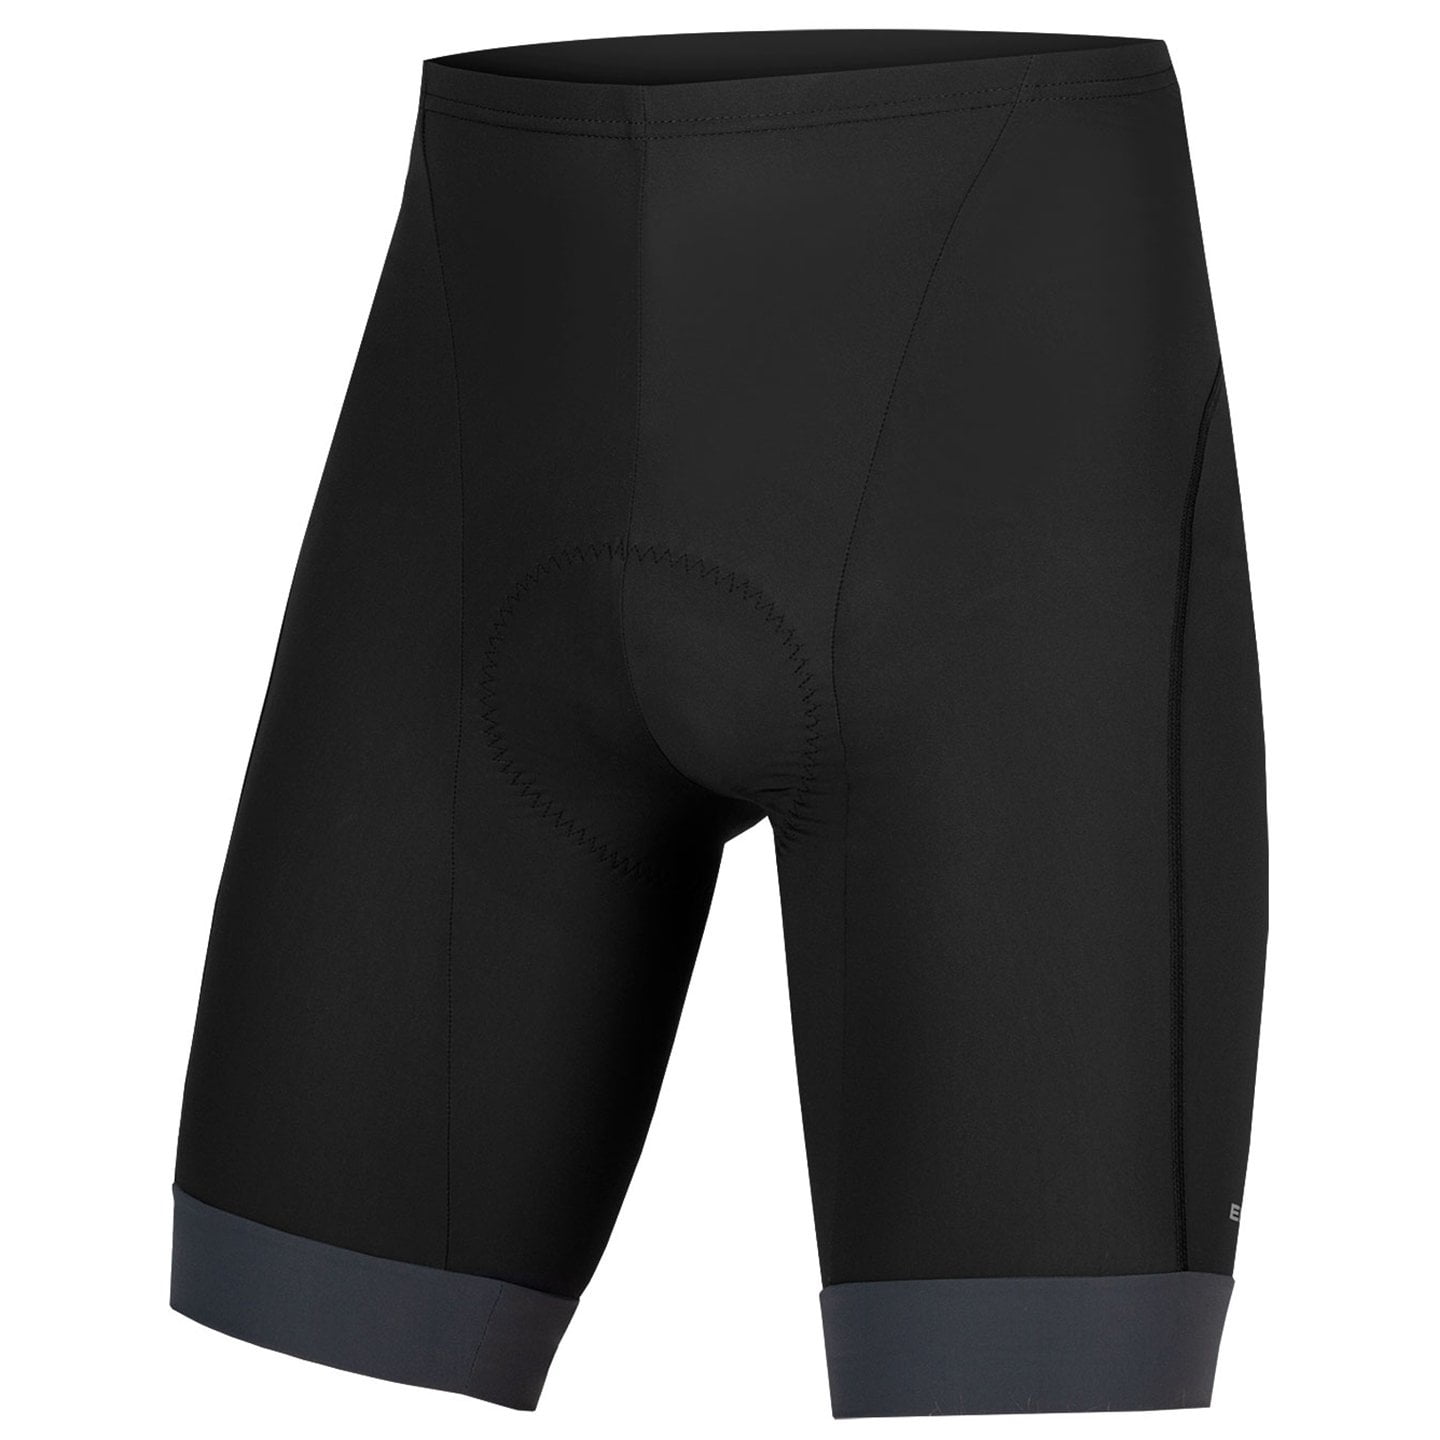 Xtract Lite Cycling Shorts Cycling Shorts, for men, size XL, Cycle shorts, Cycling clothing